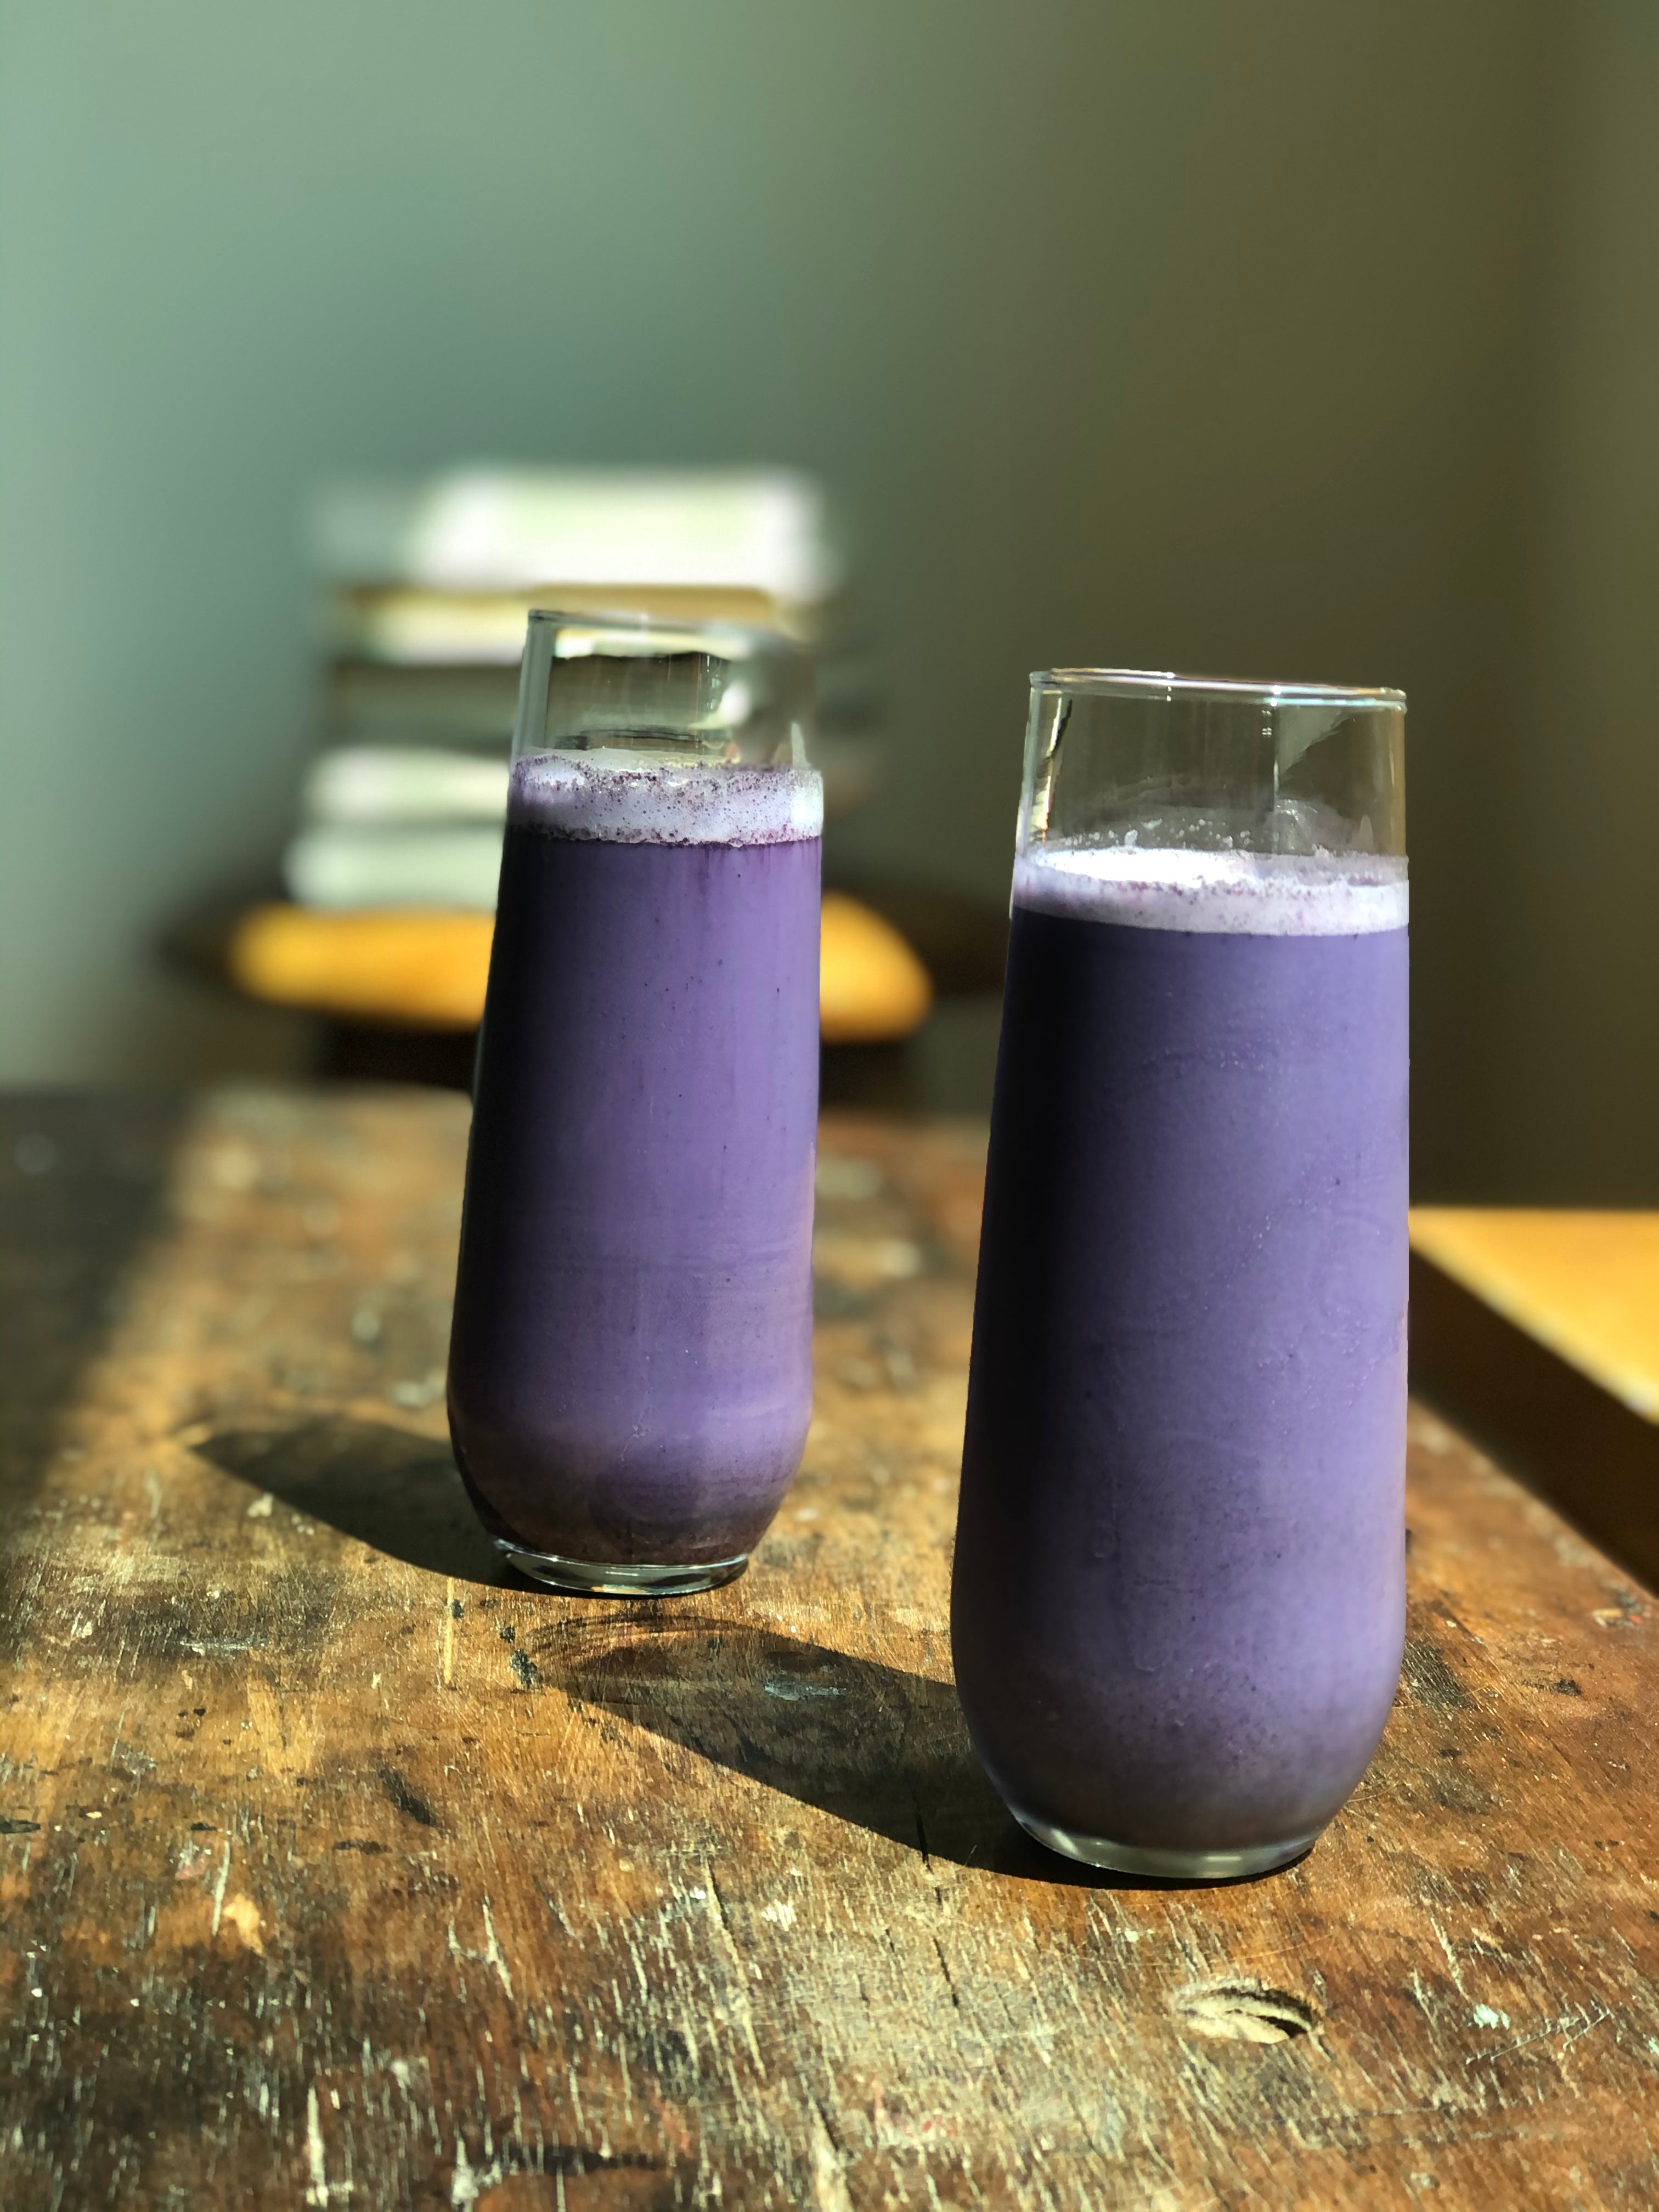 Purple Matcha - Maqui Berry Powder